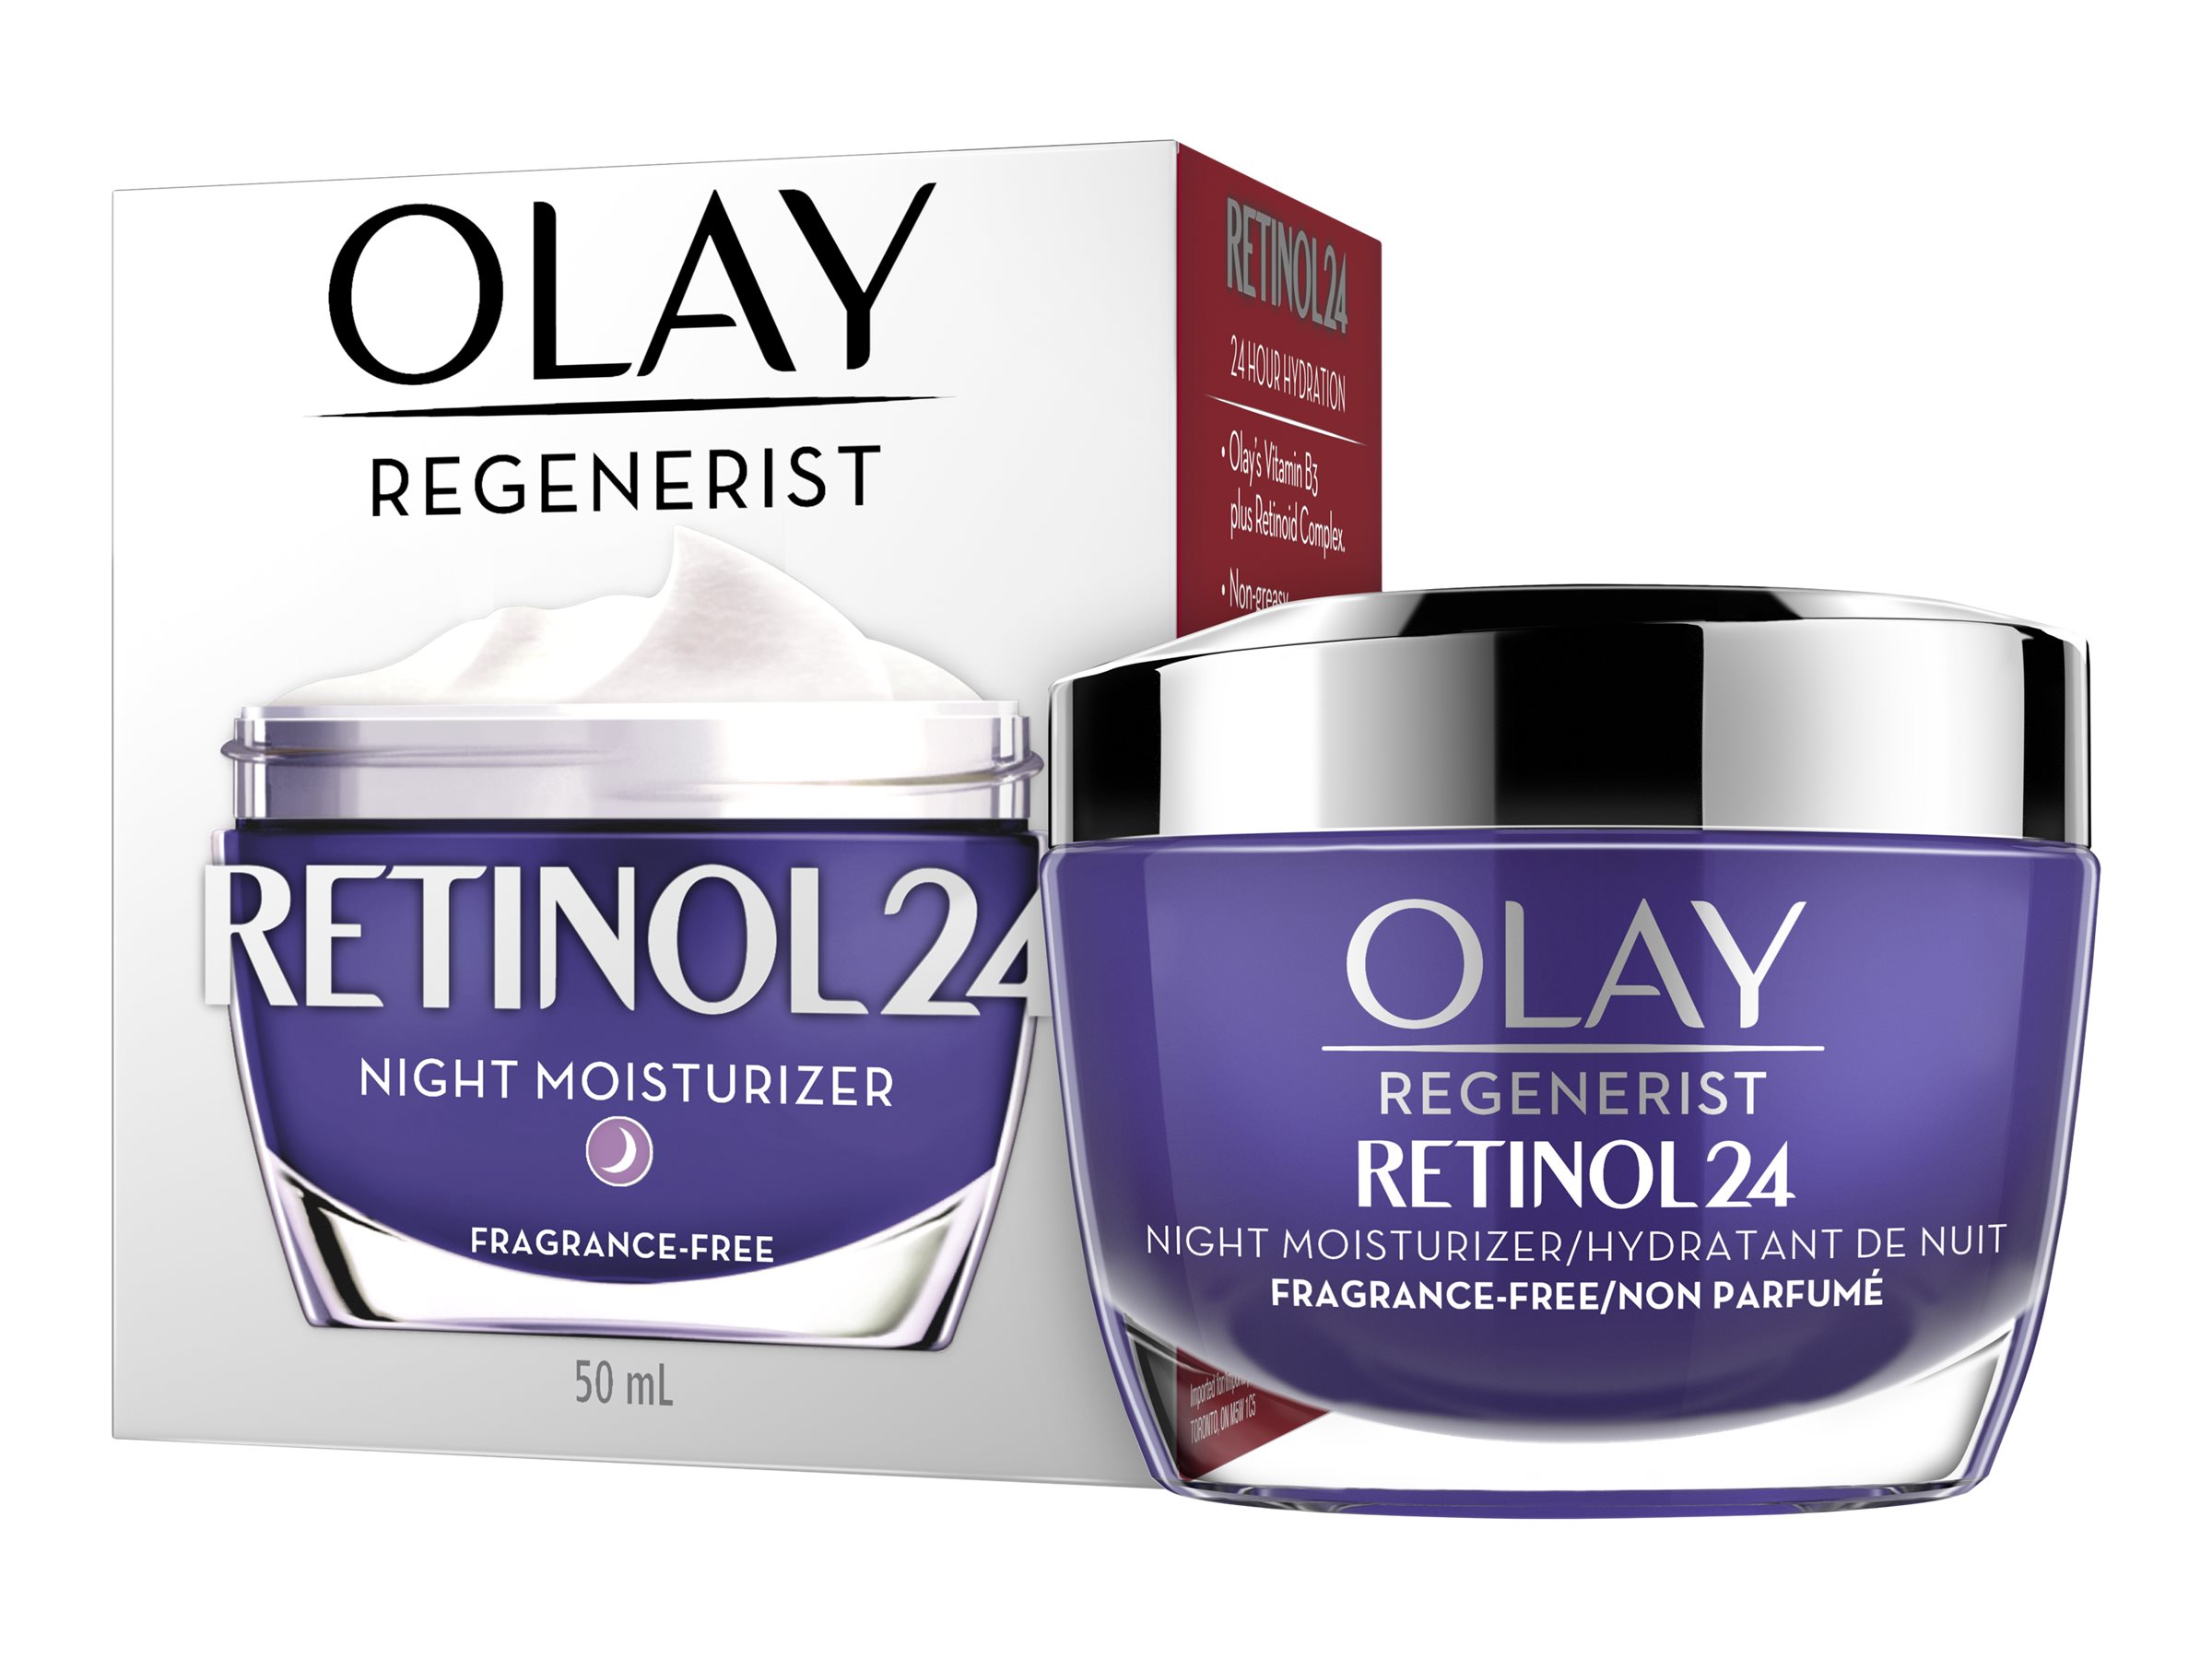 Olay Regenerist Retinol 24 Night Moisturizer - 50ml